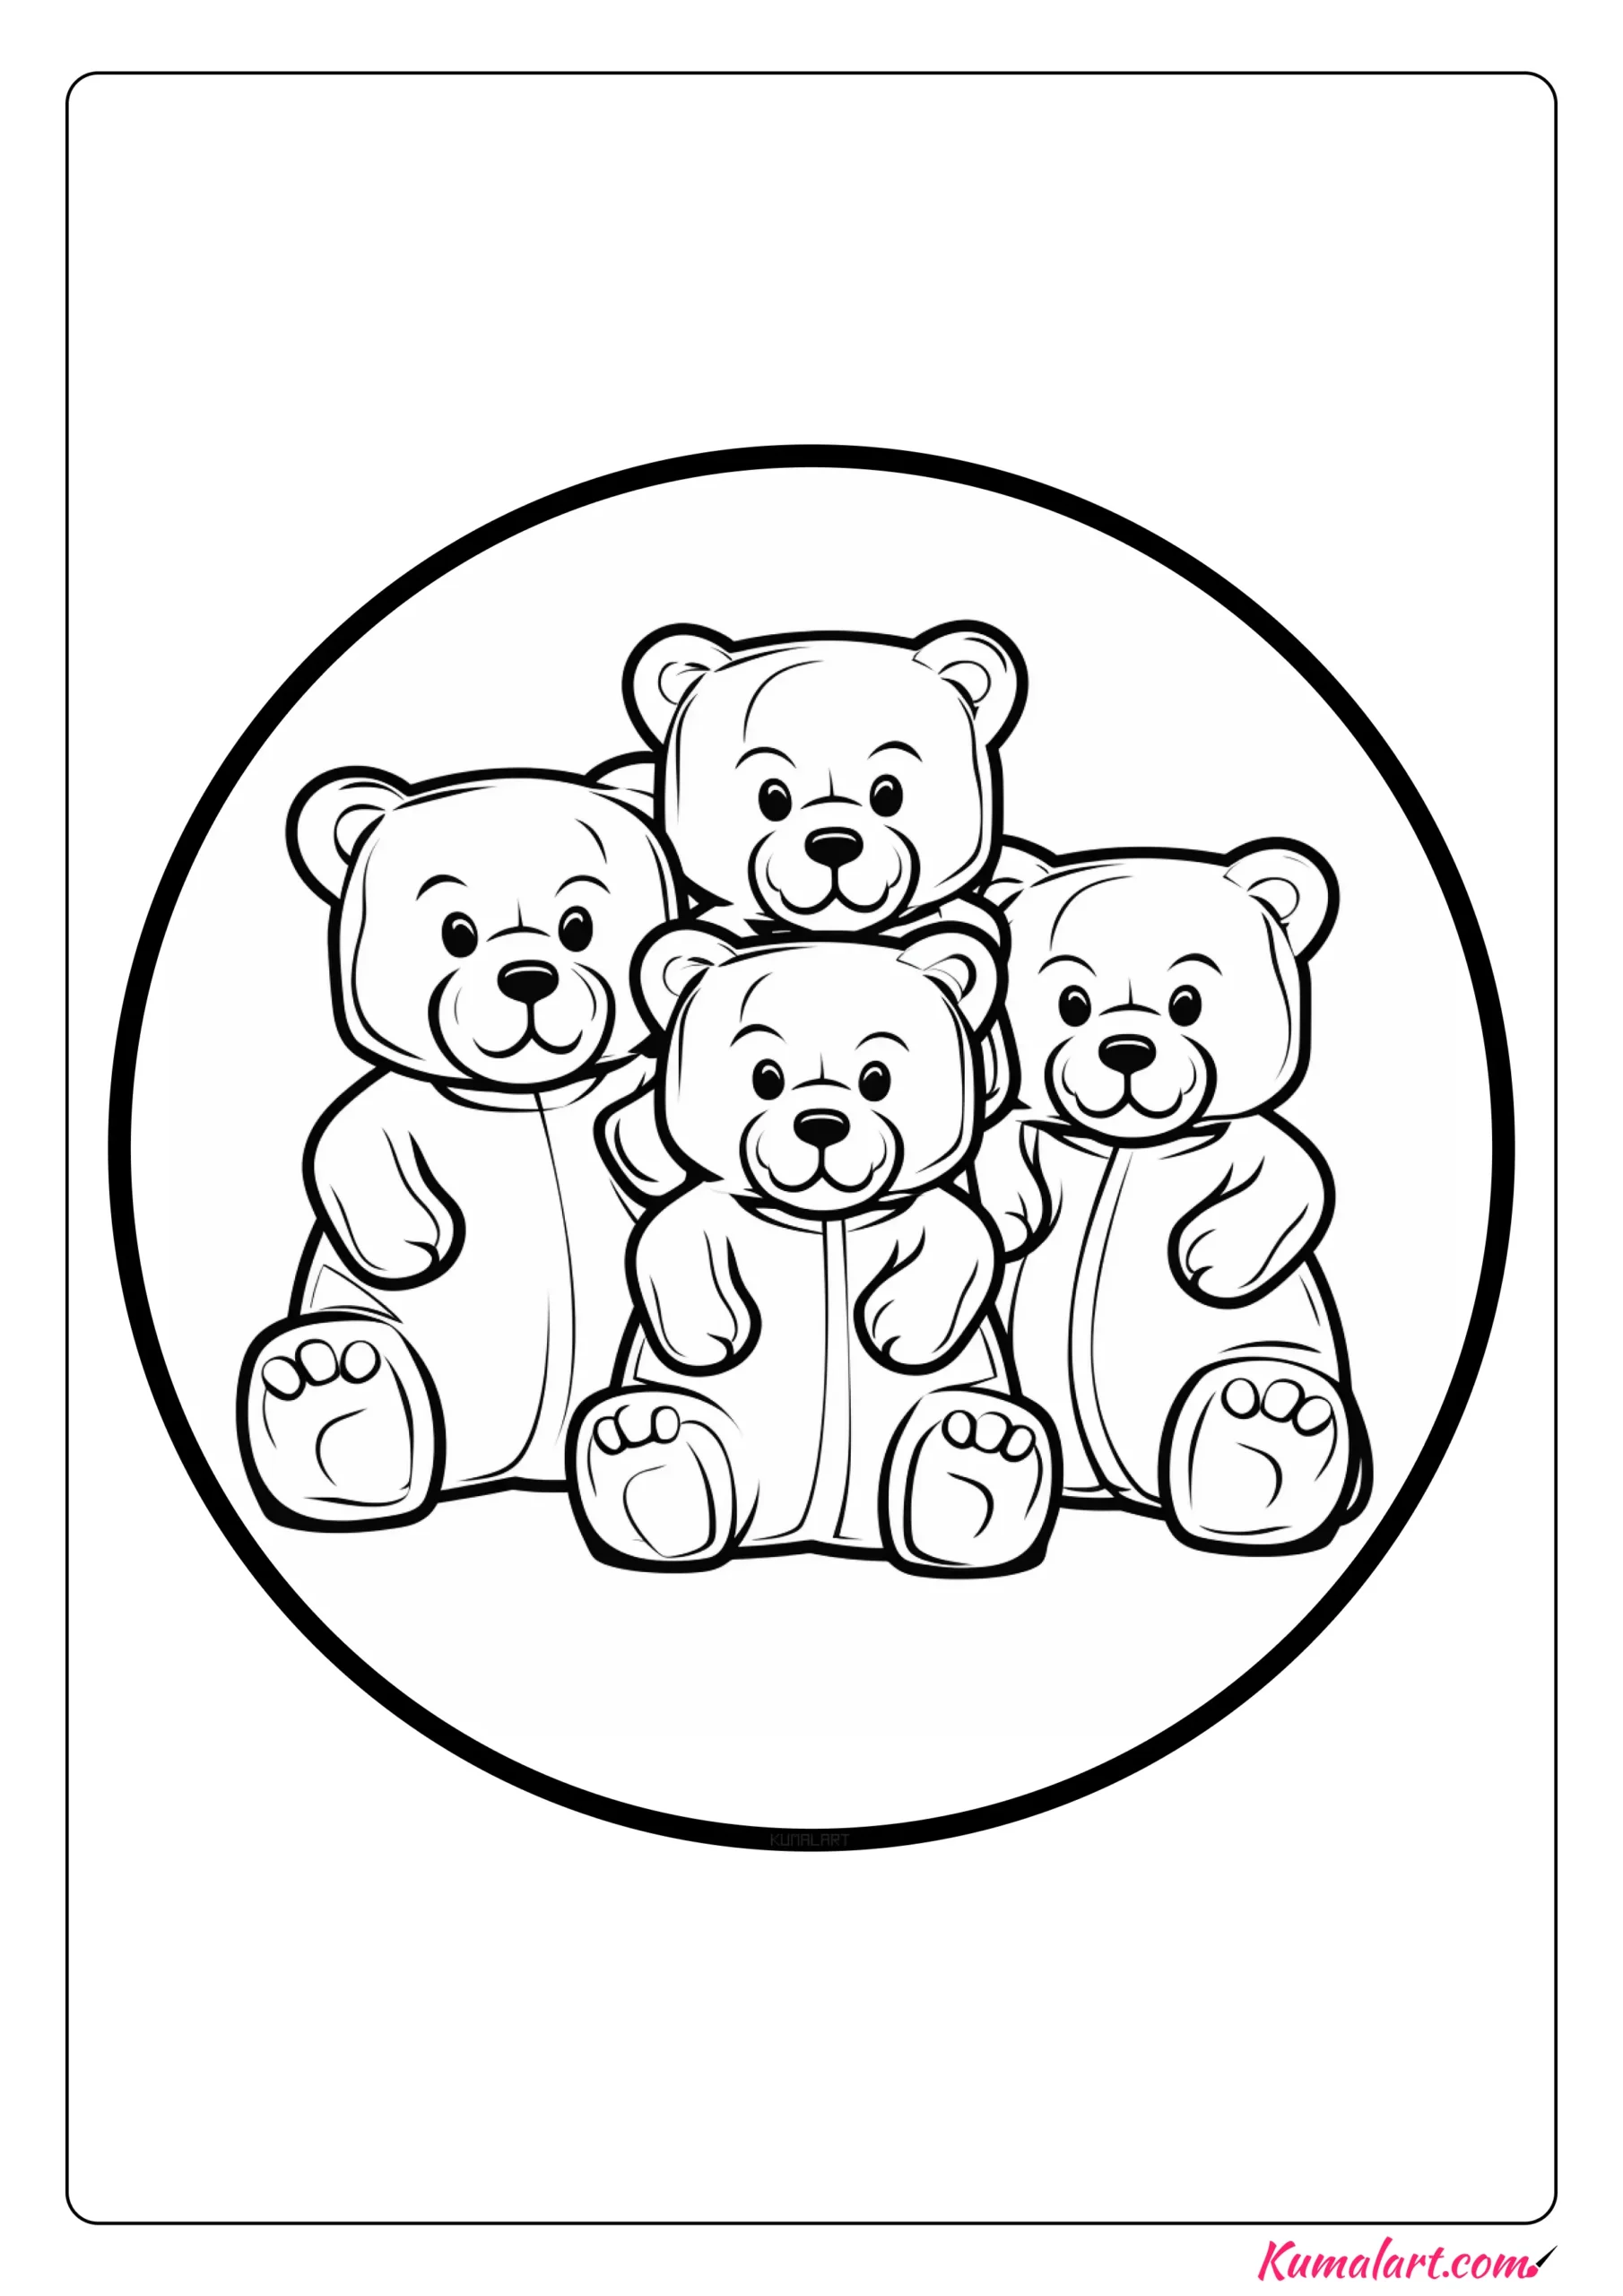 Enchanting Gummi Bears Coloring Page